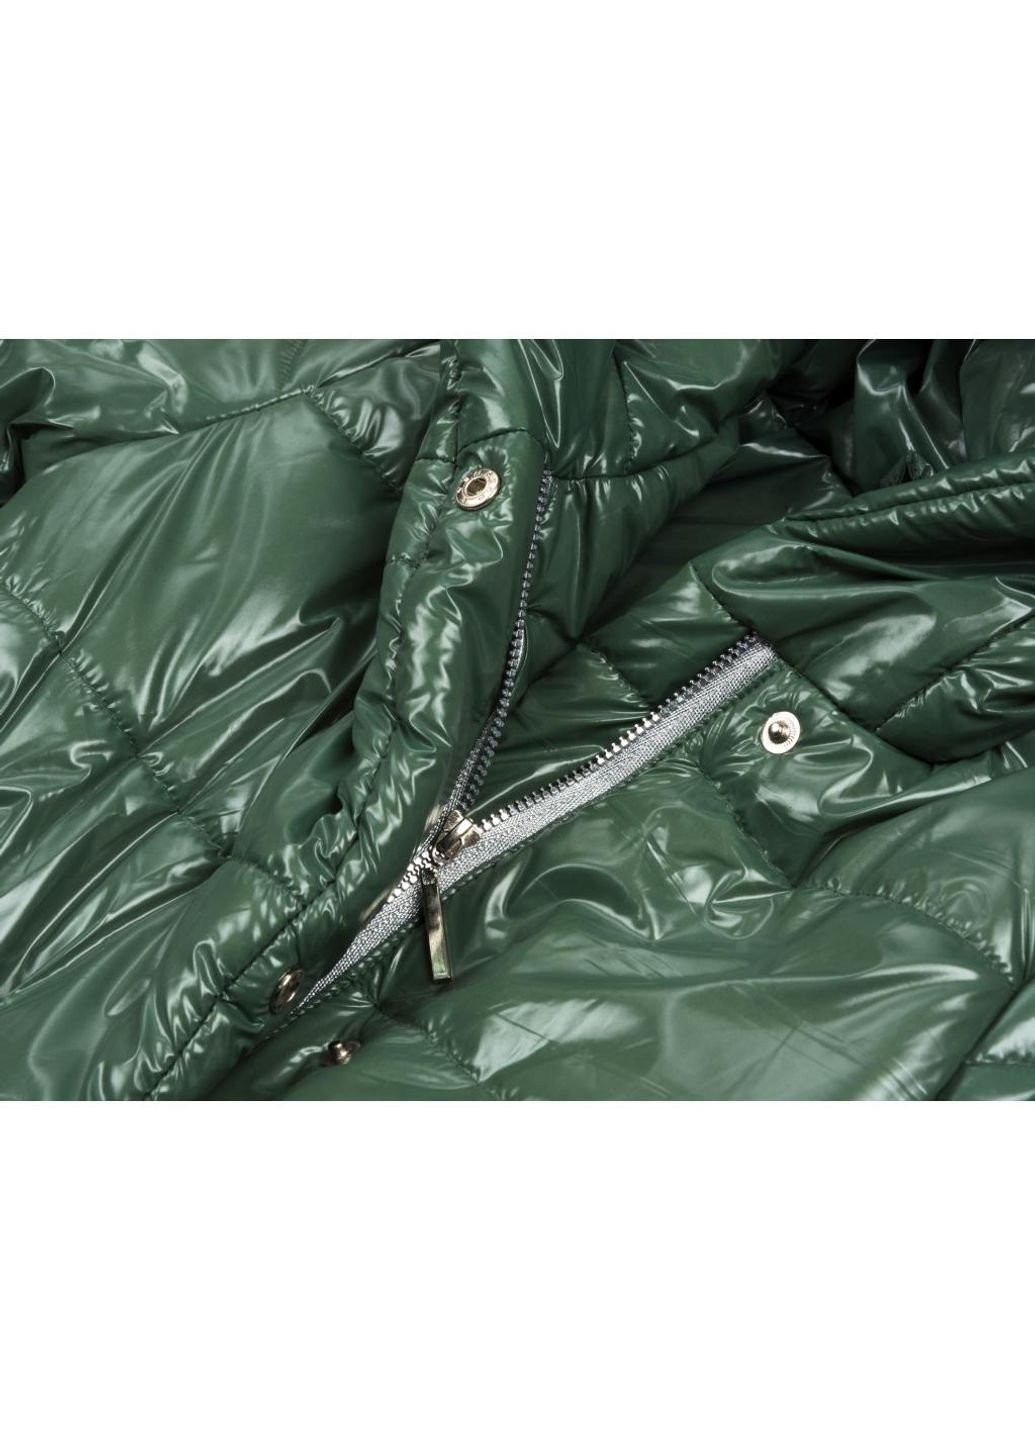 Оливкова демісезонна куртка подовжена "felice" (19709-104-green) Brilliant